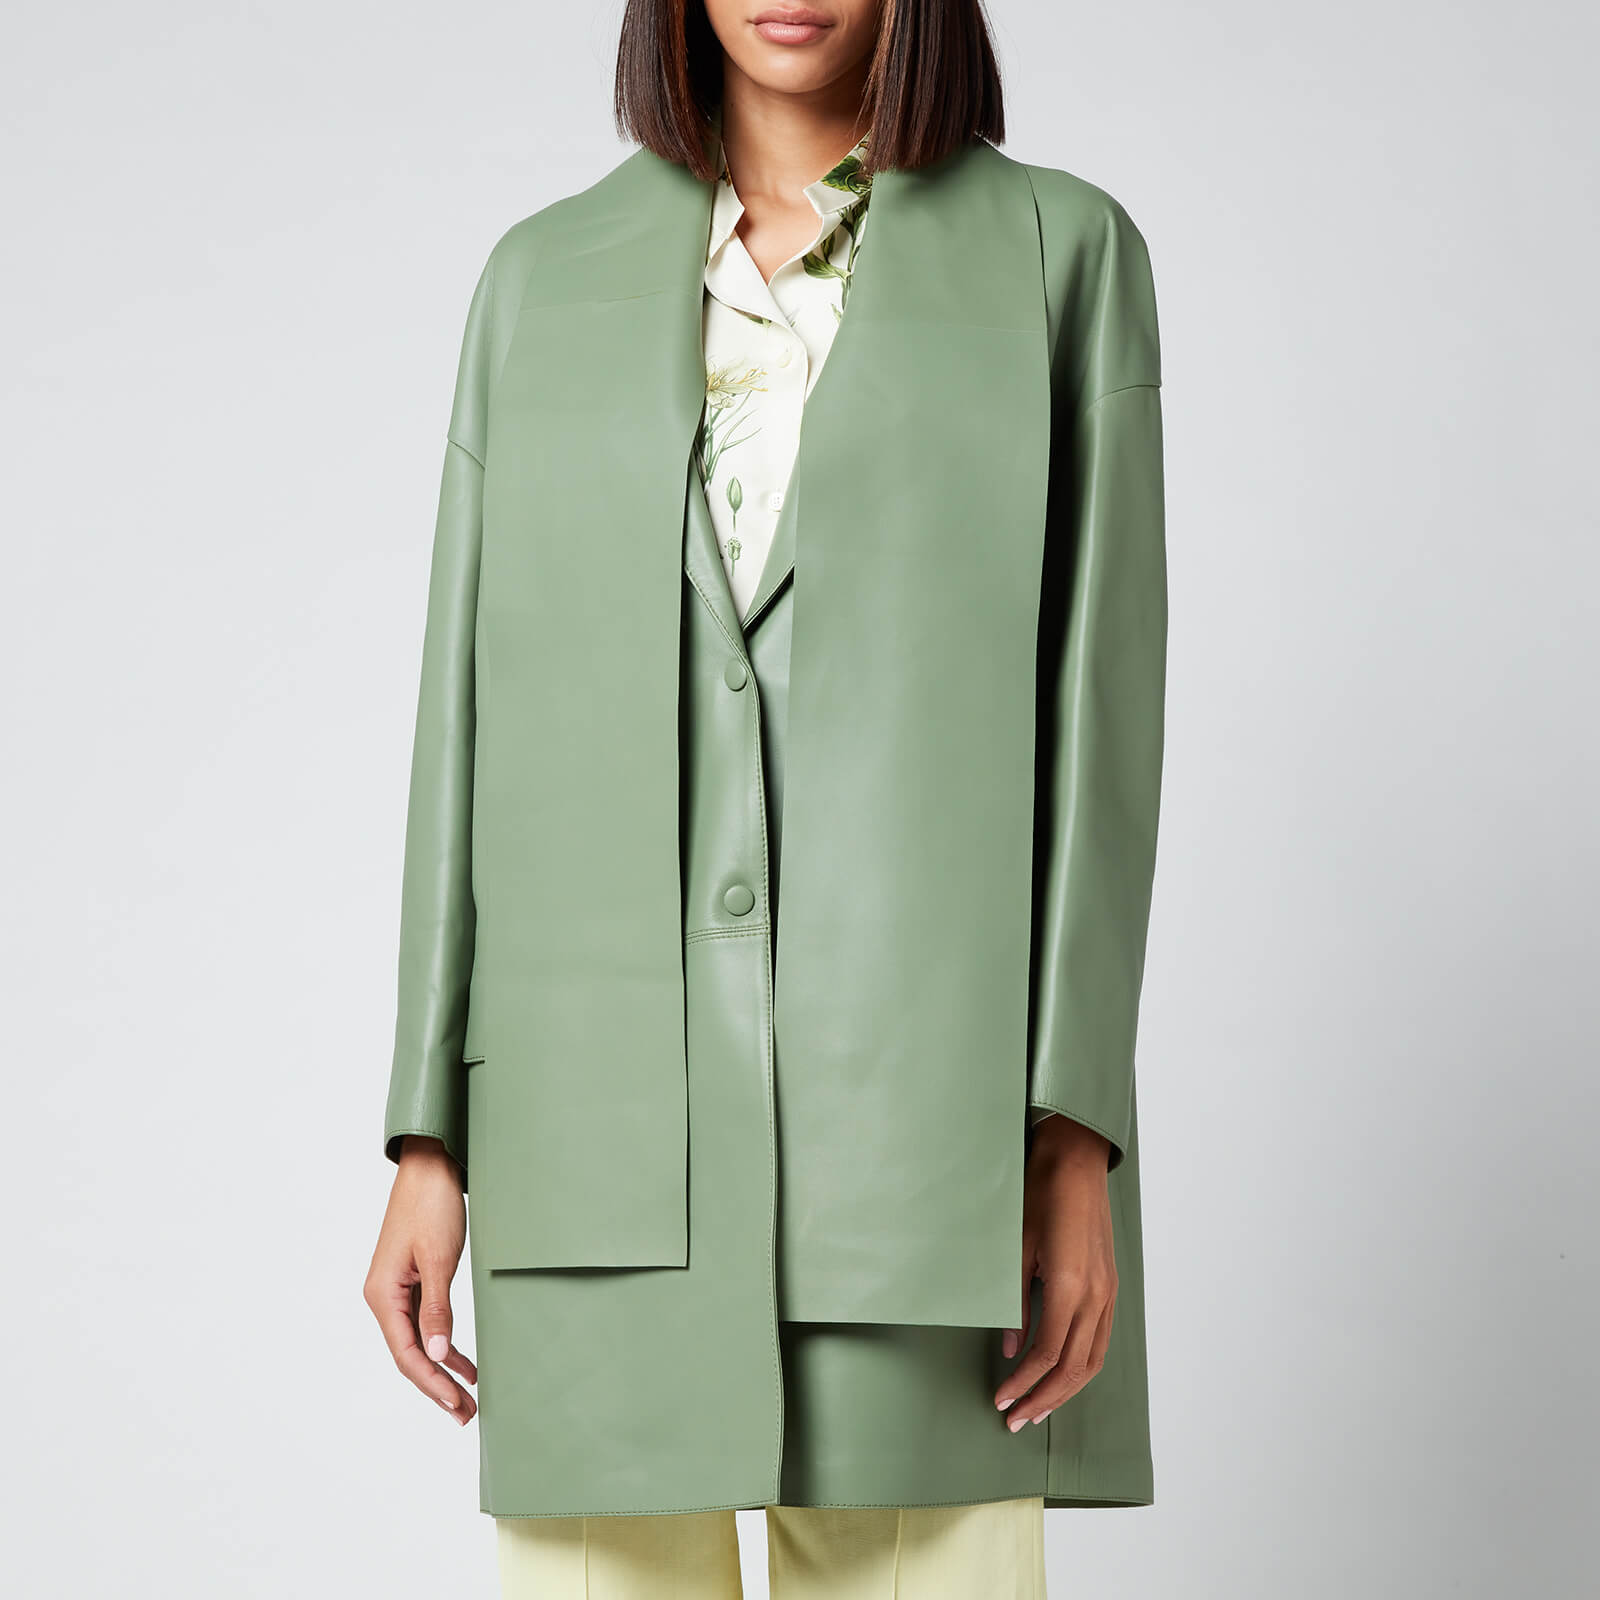 Salvatore Ferragamo Women's Long Leather Coat - Hedren Green - IT 36